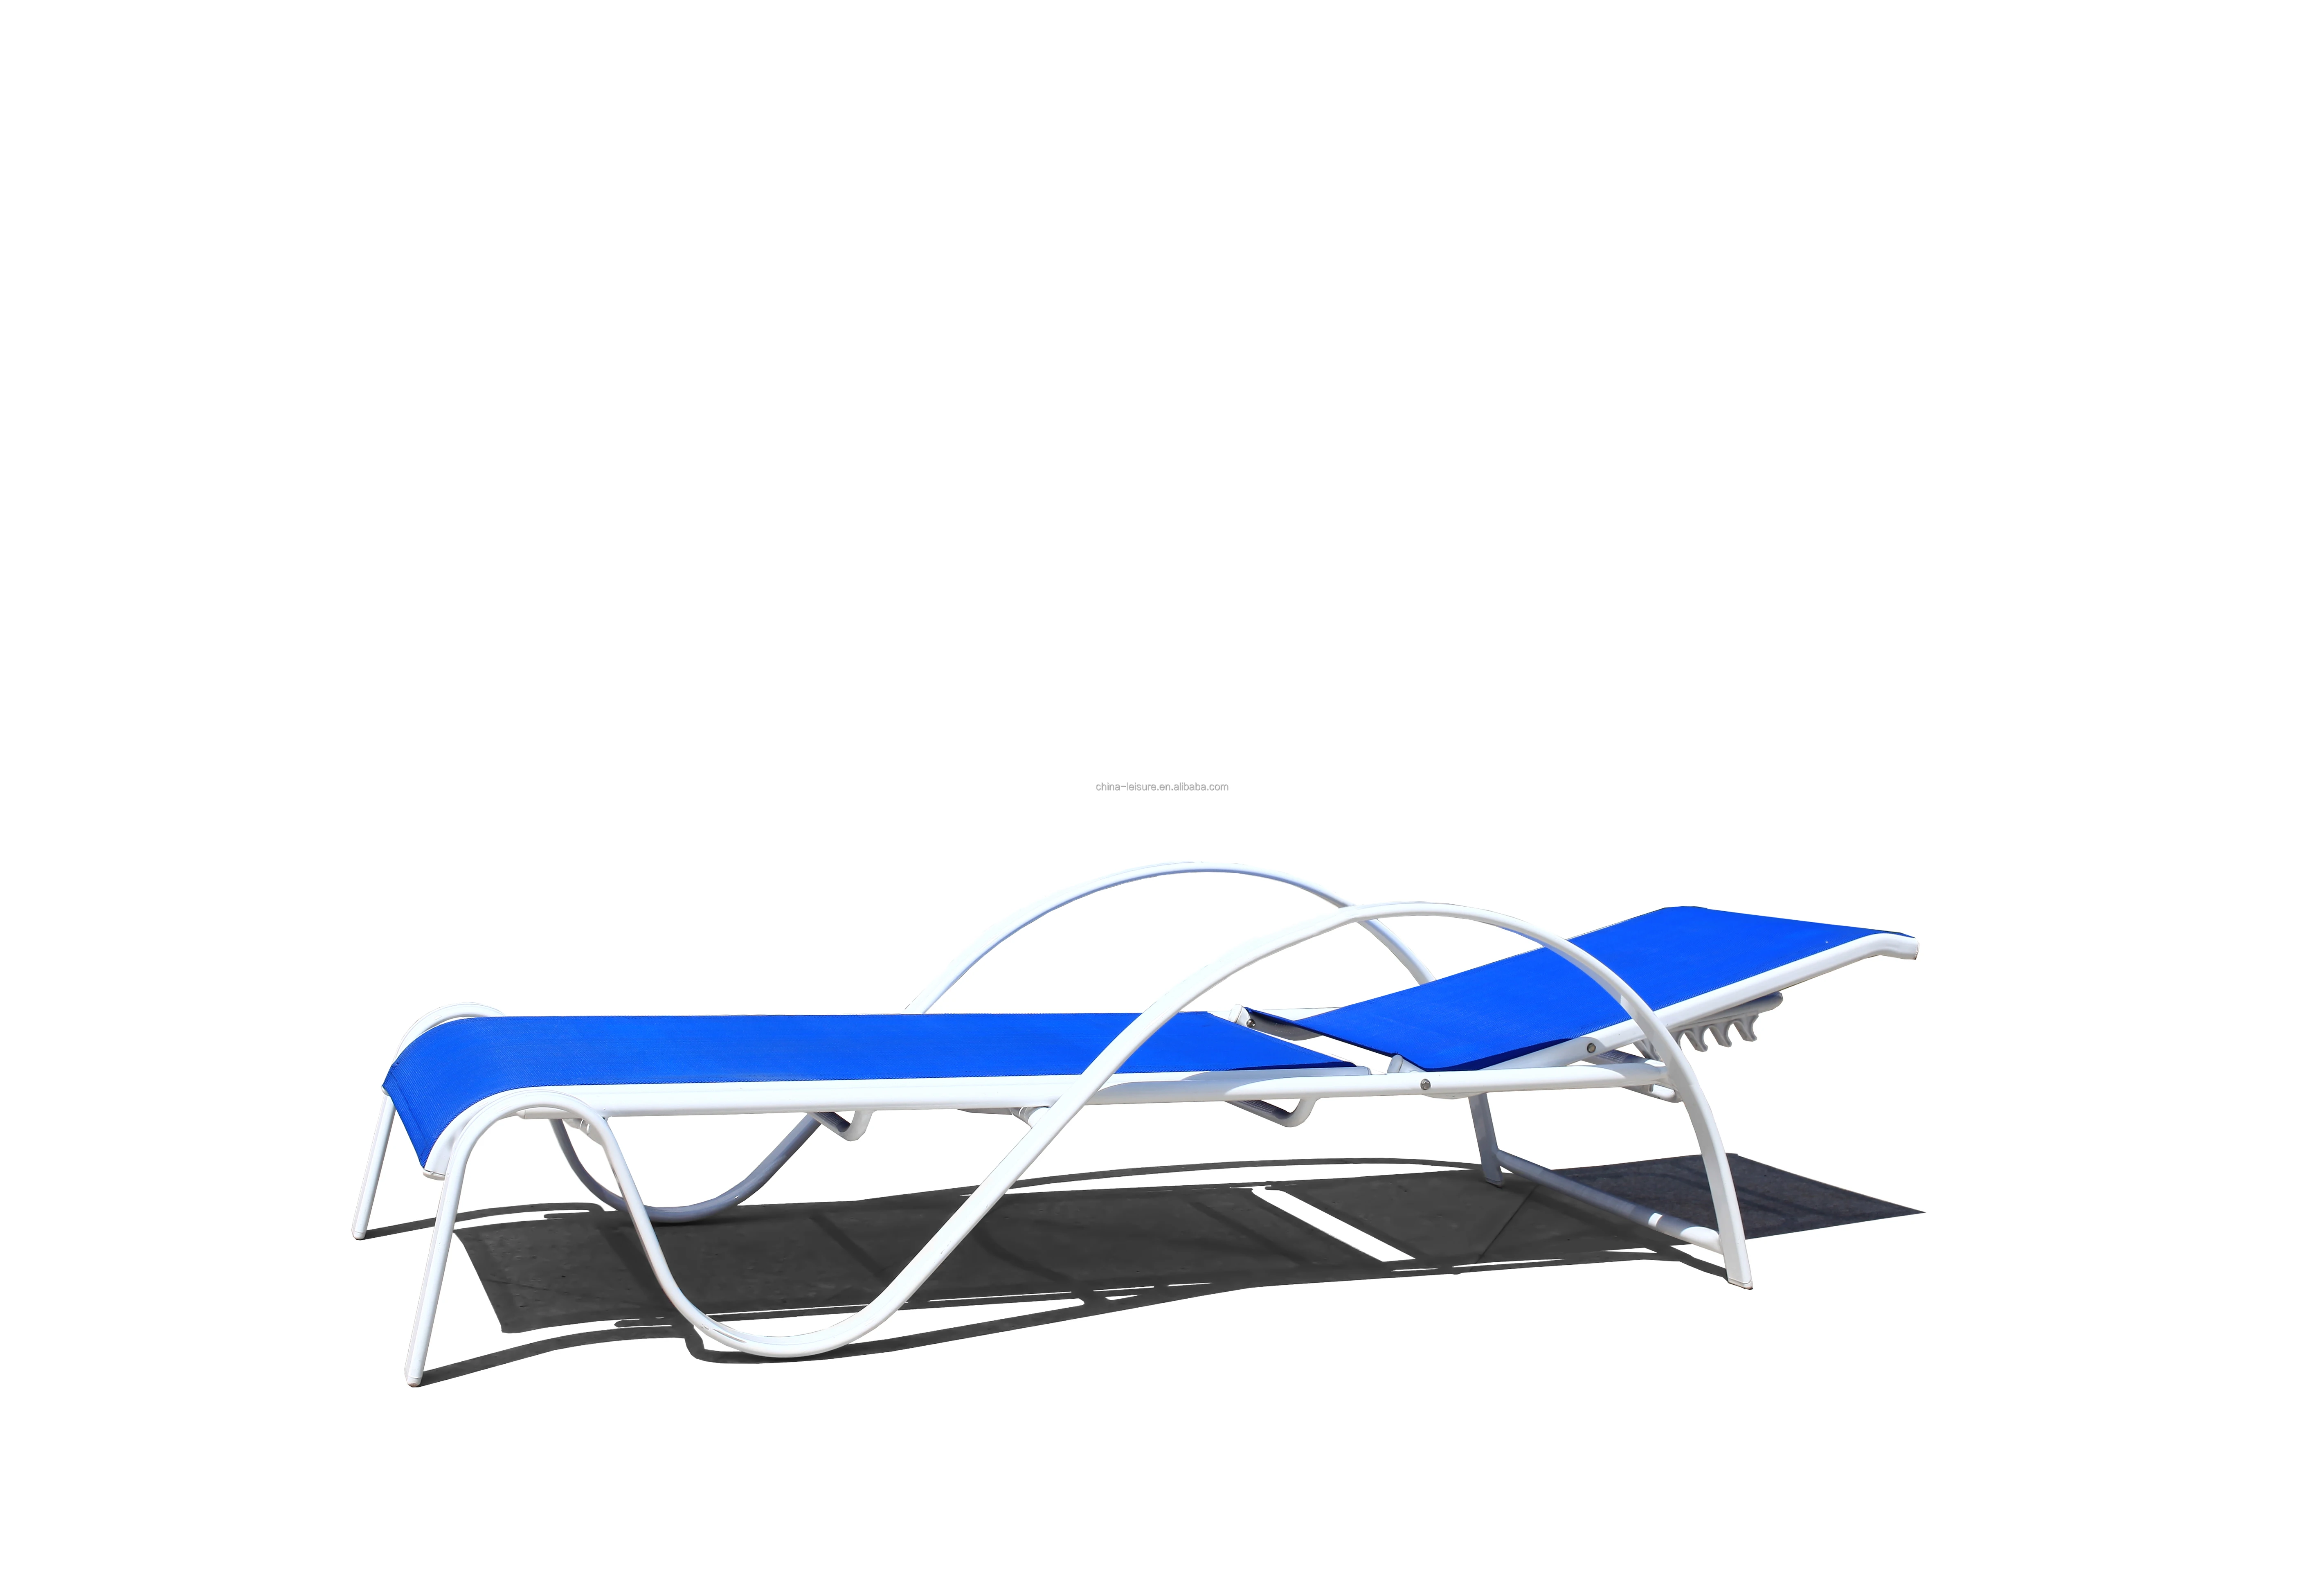 Modern Aluminium Metal Outdoor Furniture Adjustable Hotel Swimming Pool Beach Patio Garden Sun Lounger Sunbed